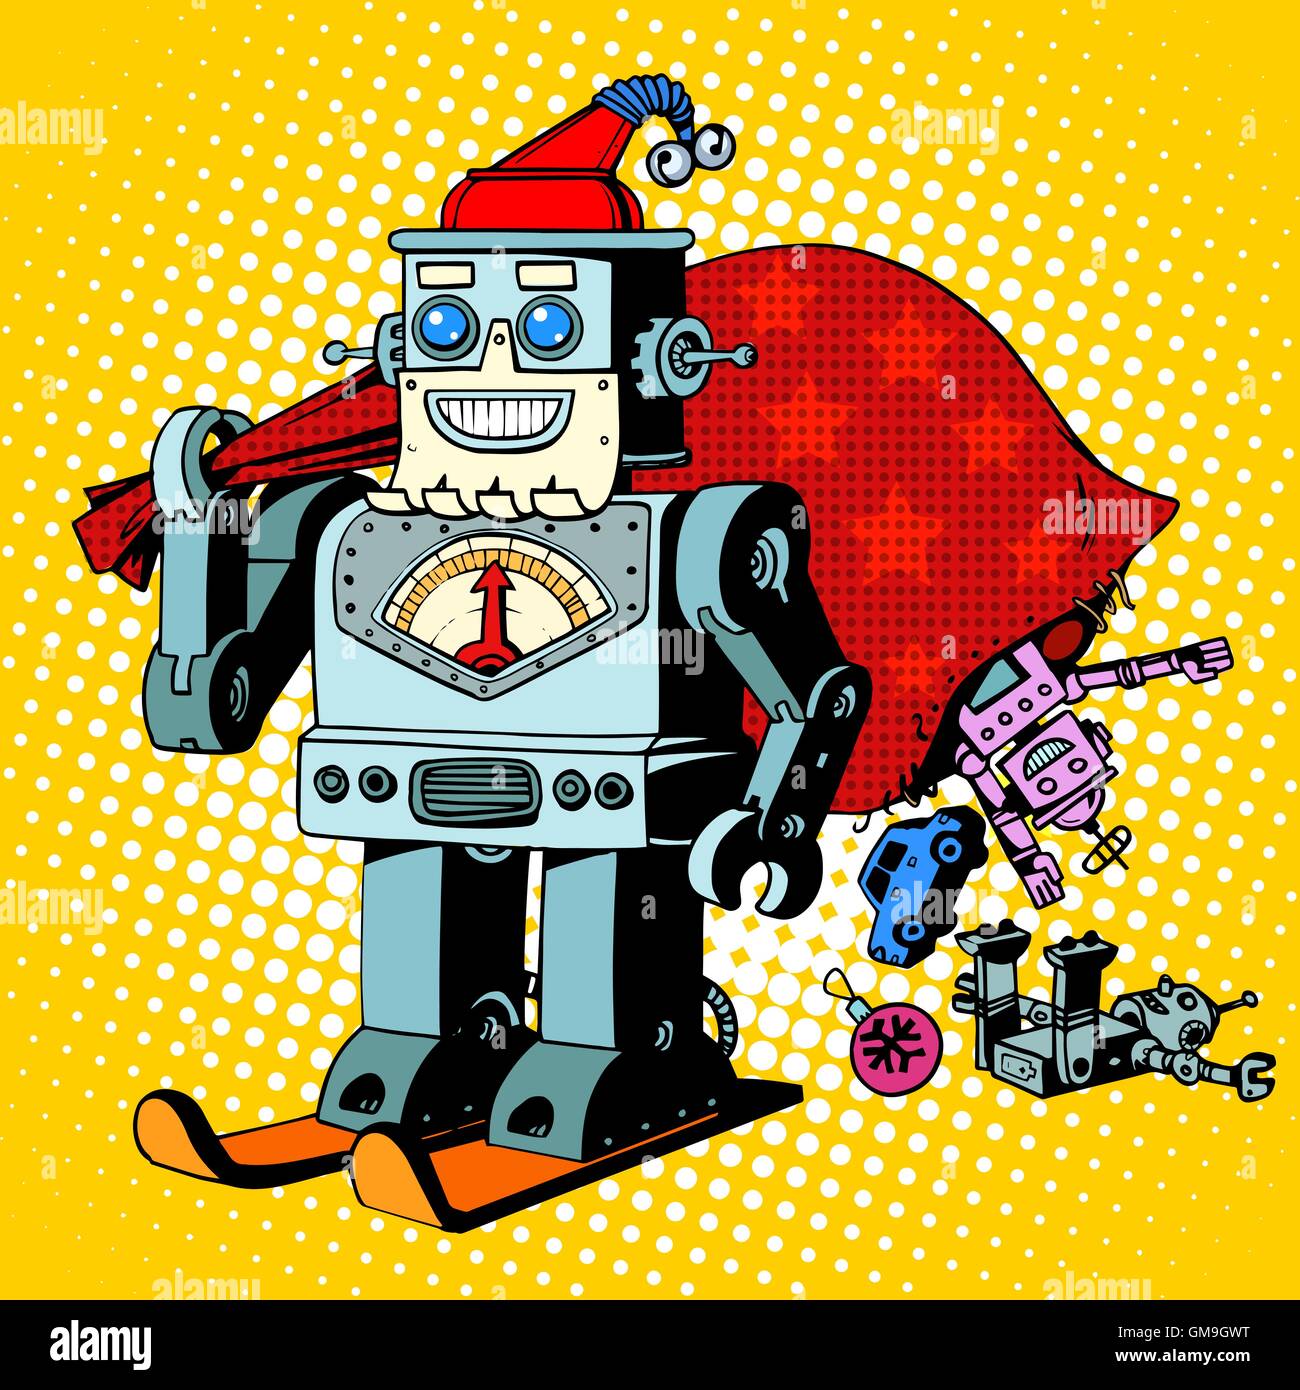 Robot Santa Claus Christmas gifts humor character Robosanta Stock Vector